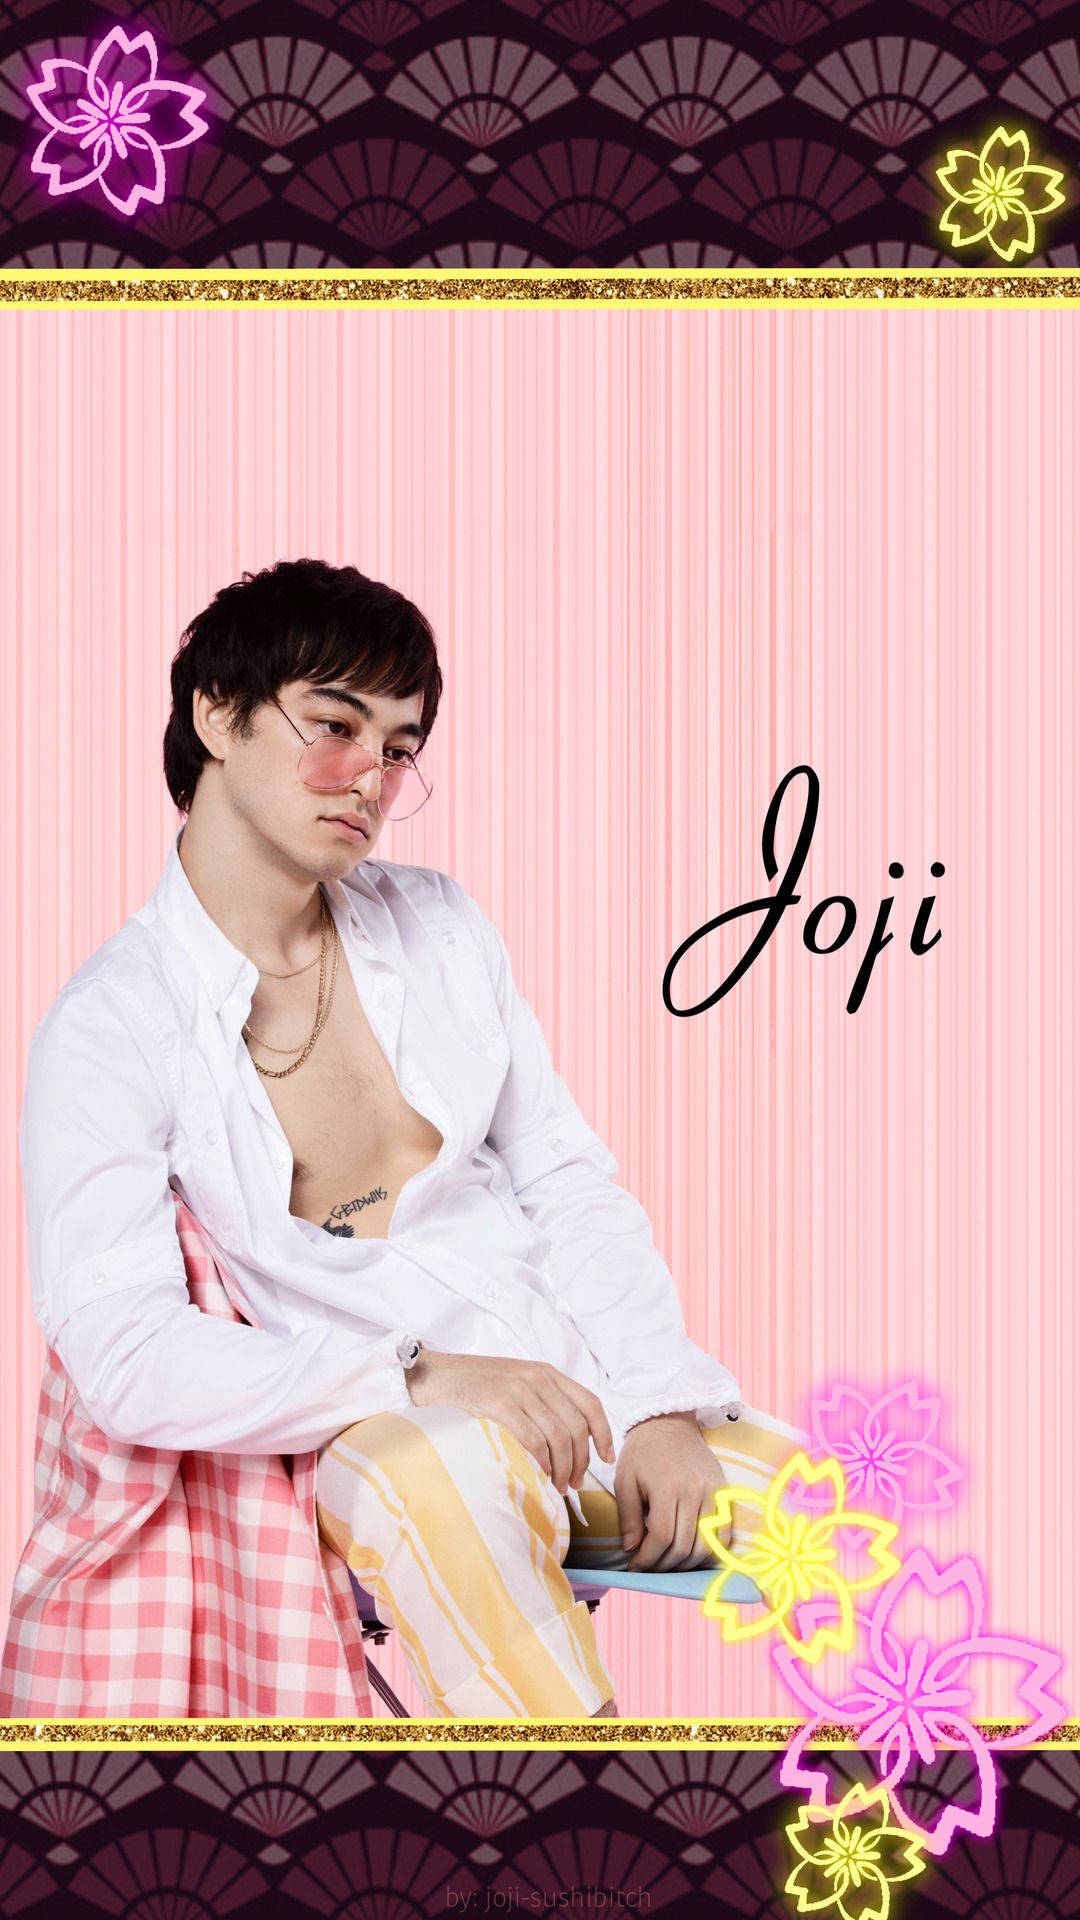 Girly Designed Poster Of Joji Background